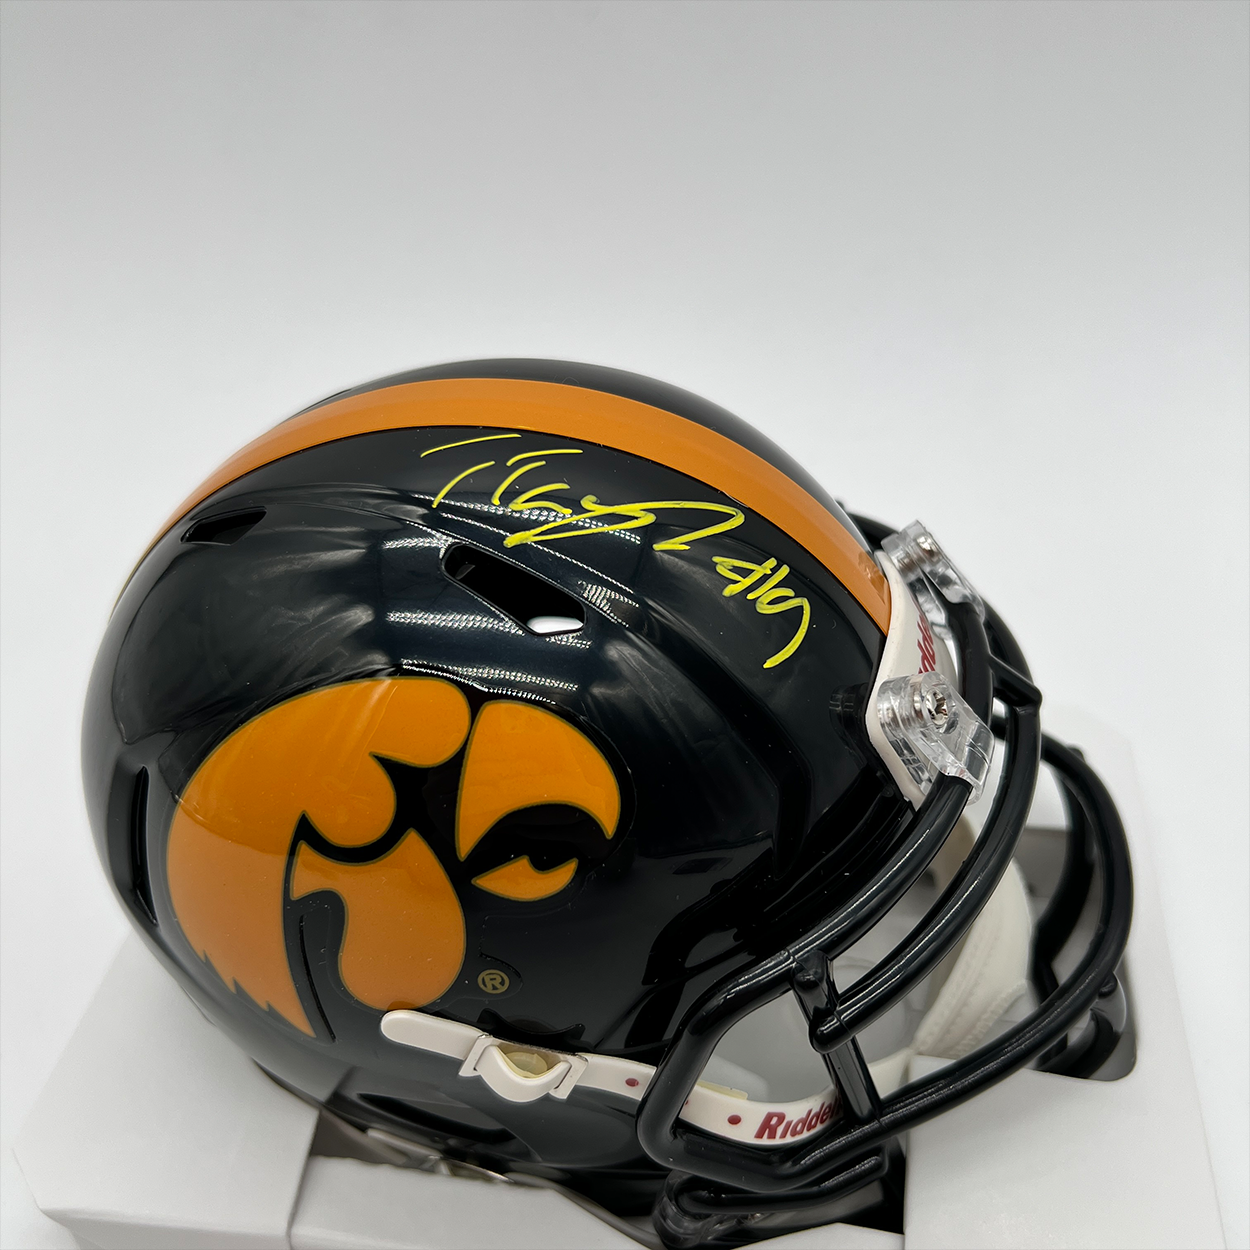 Tory Taylor Autographed Iowa Hawkeyes Mini Helmet (JSA Certified Authentic)